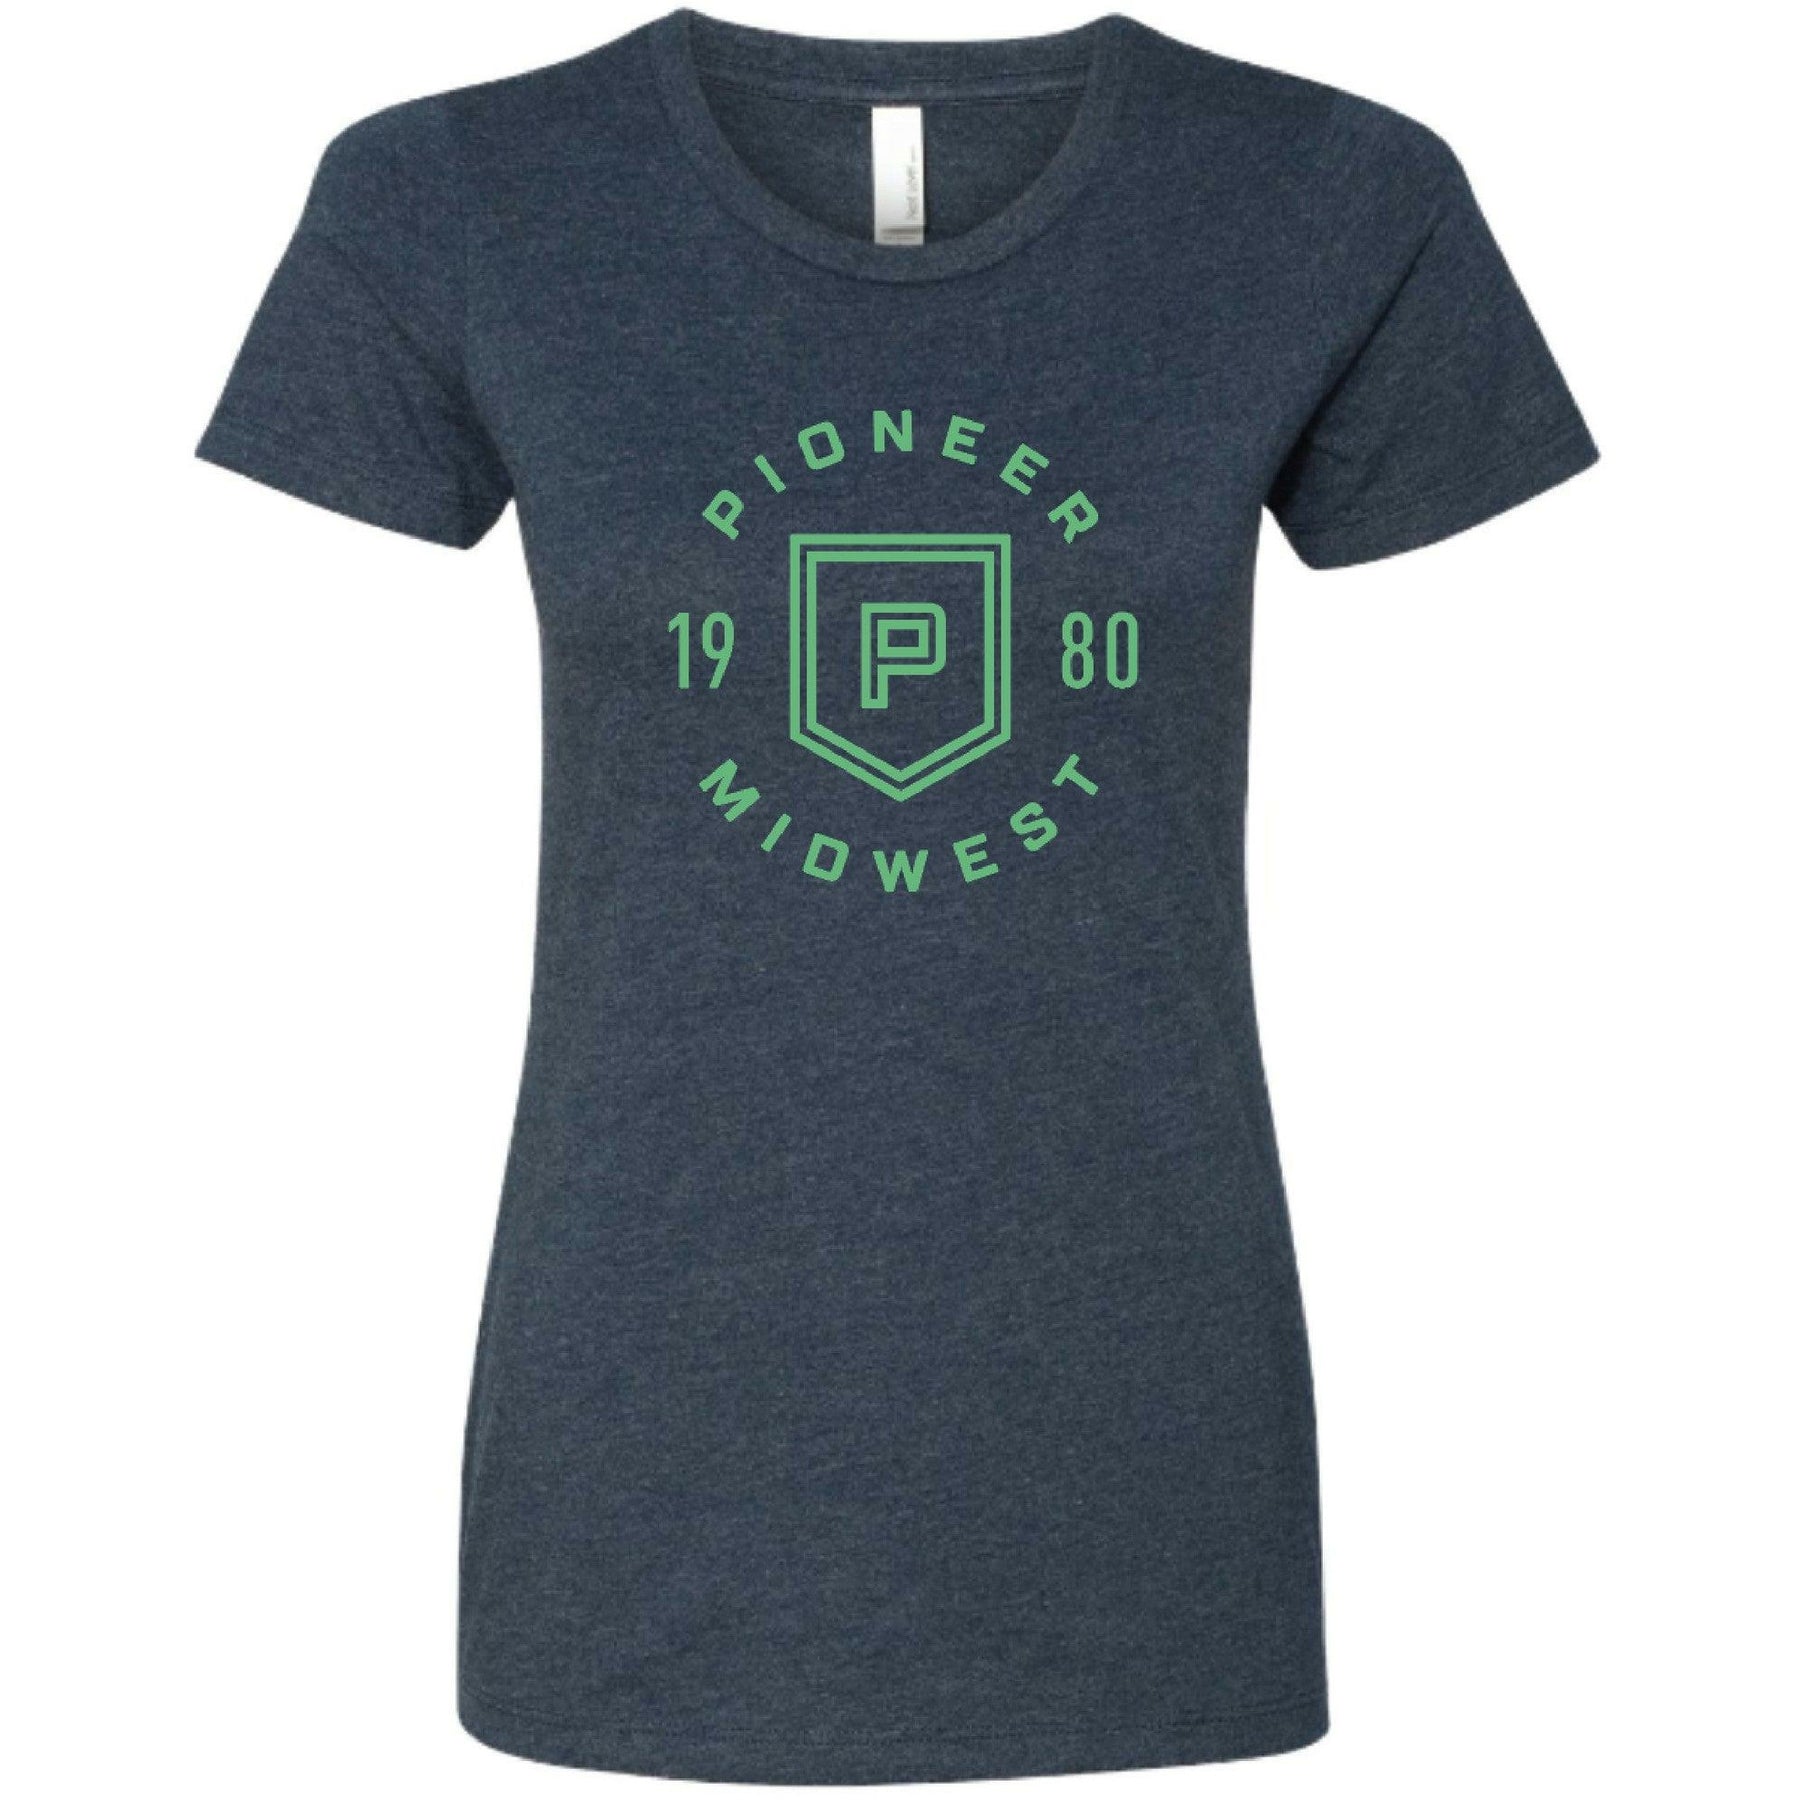 Pioneer Midwest Women's T-Shirt Navy - Pioneer Midwest